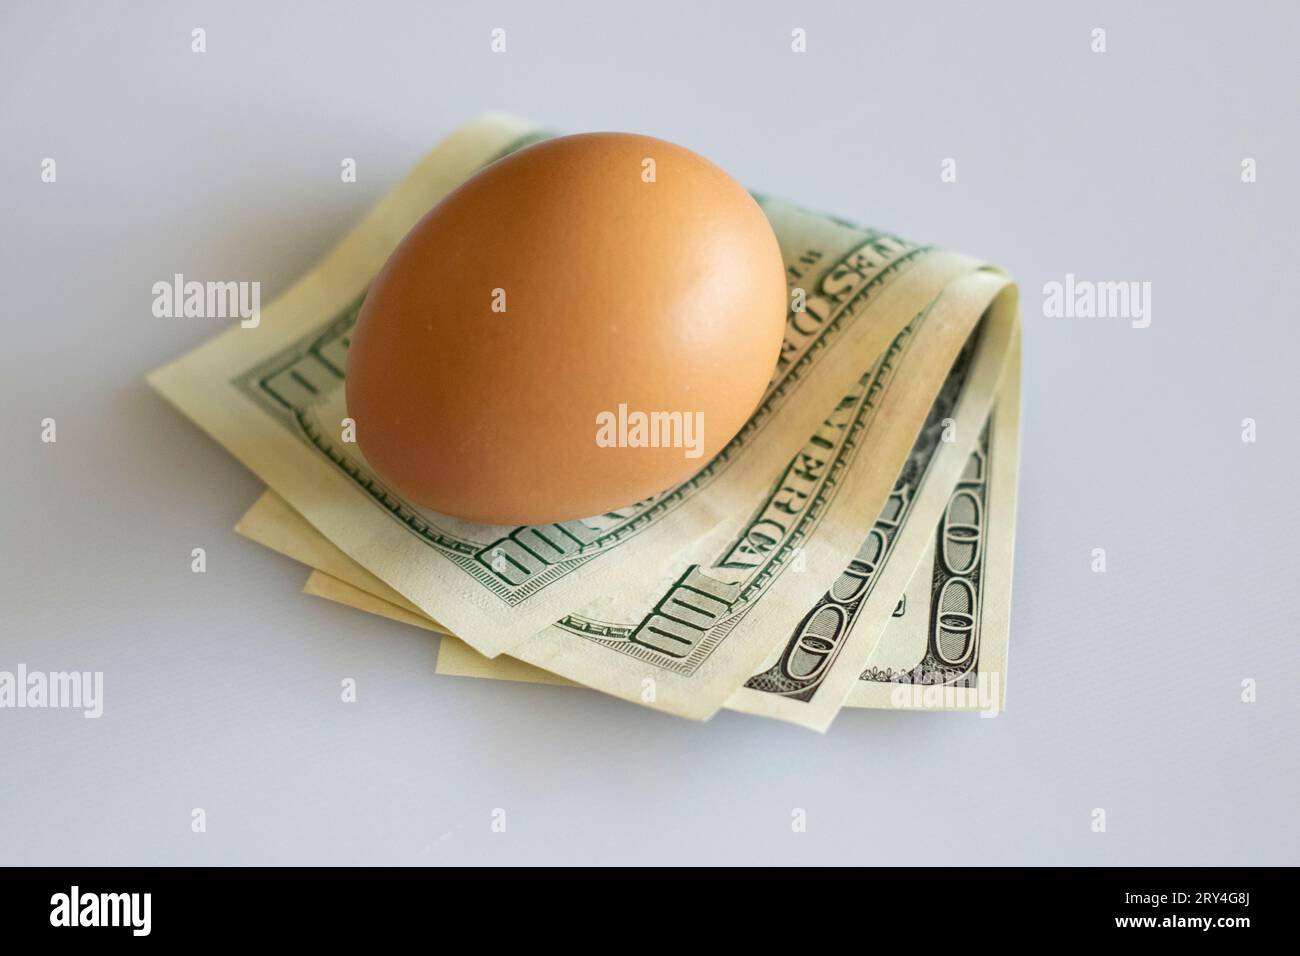 Egg on dollars concept symbolizing the fragility of the economy, markets and savings. Stock Photo